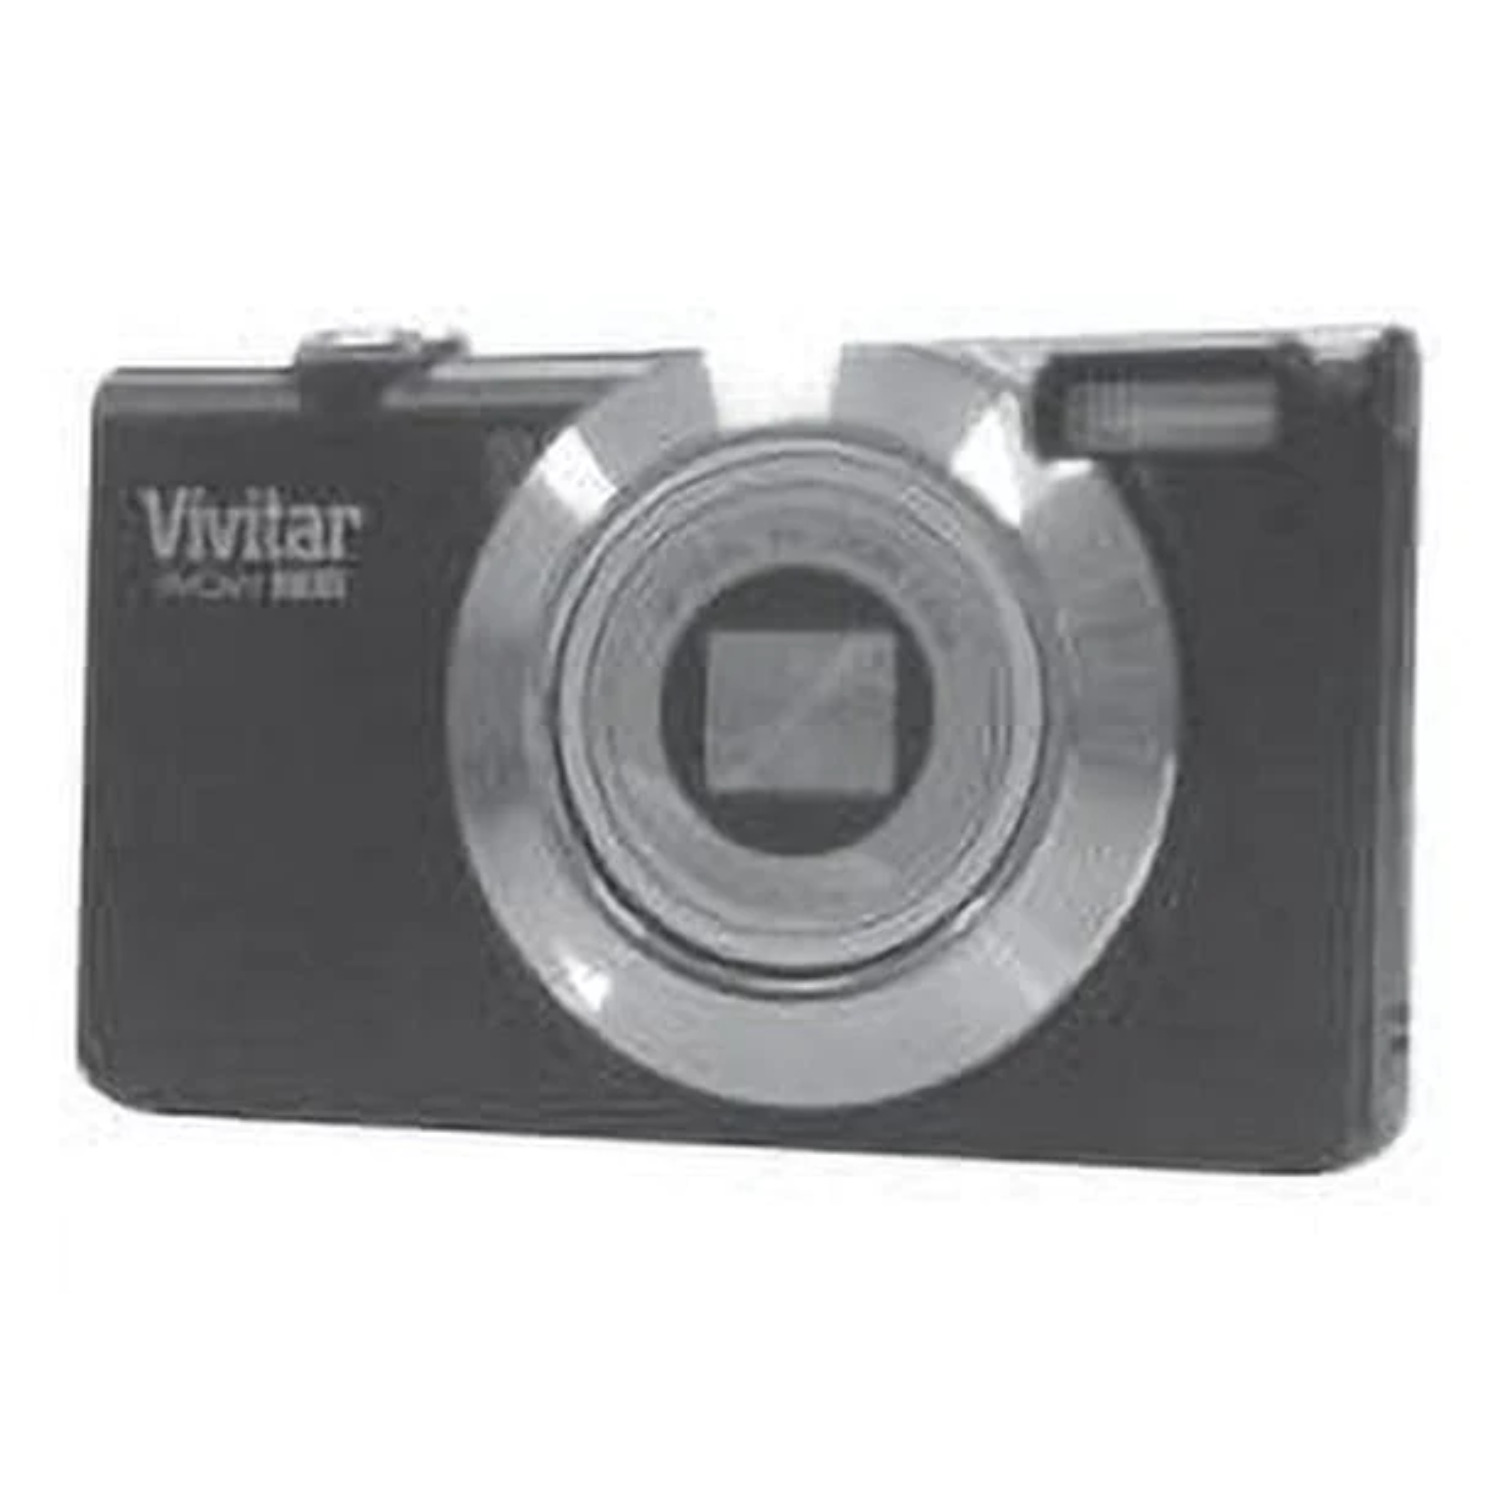 Vivitar Vivicam S830 - Digital Camera - Compact - 16.0 Mp - 8x Optical Zoom - Black - image 1 of 1